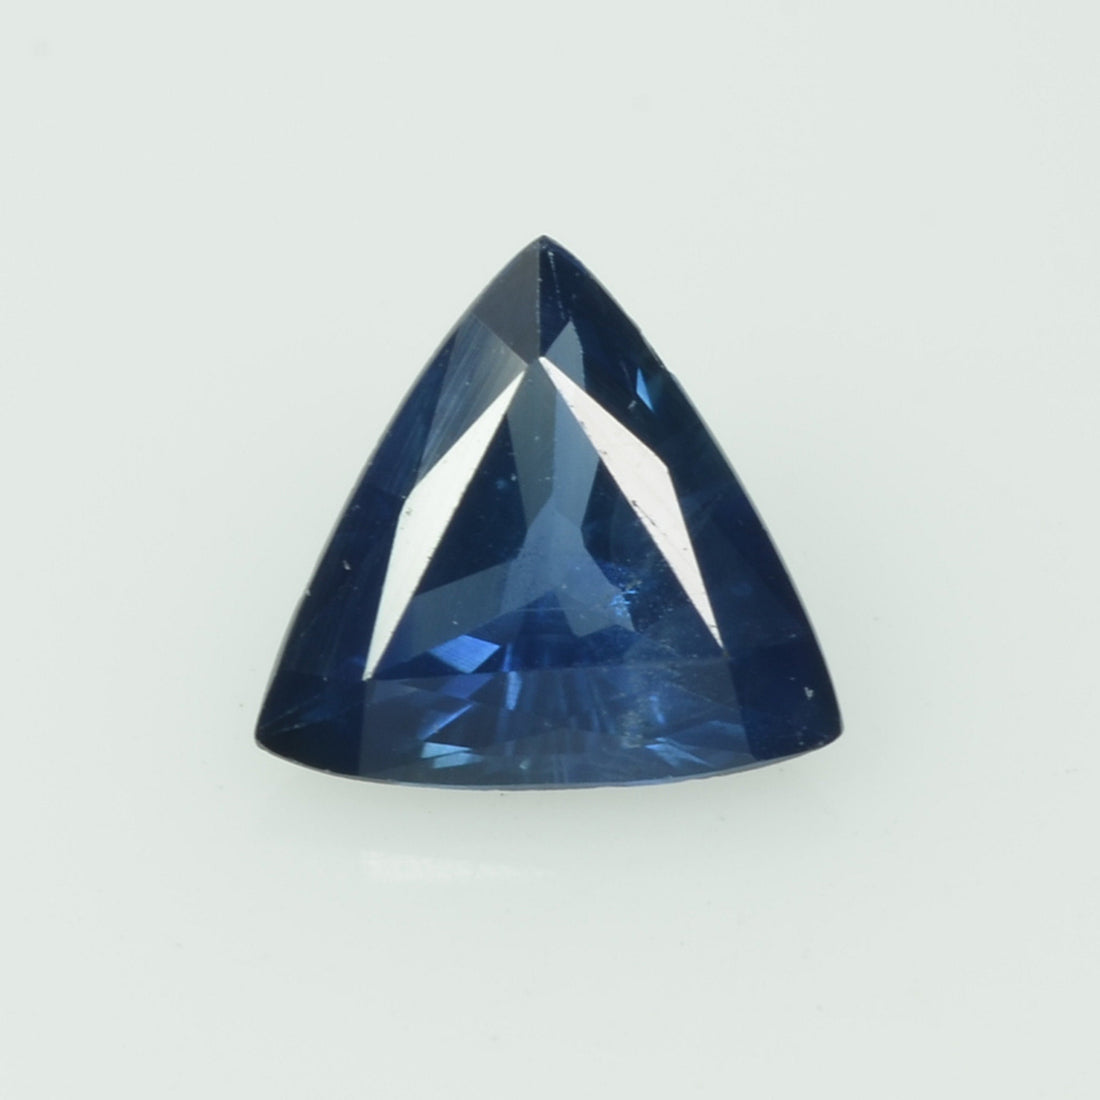 0.49 Cts Natural Blue Sapphire Loose Gemstone Trillion Cut